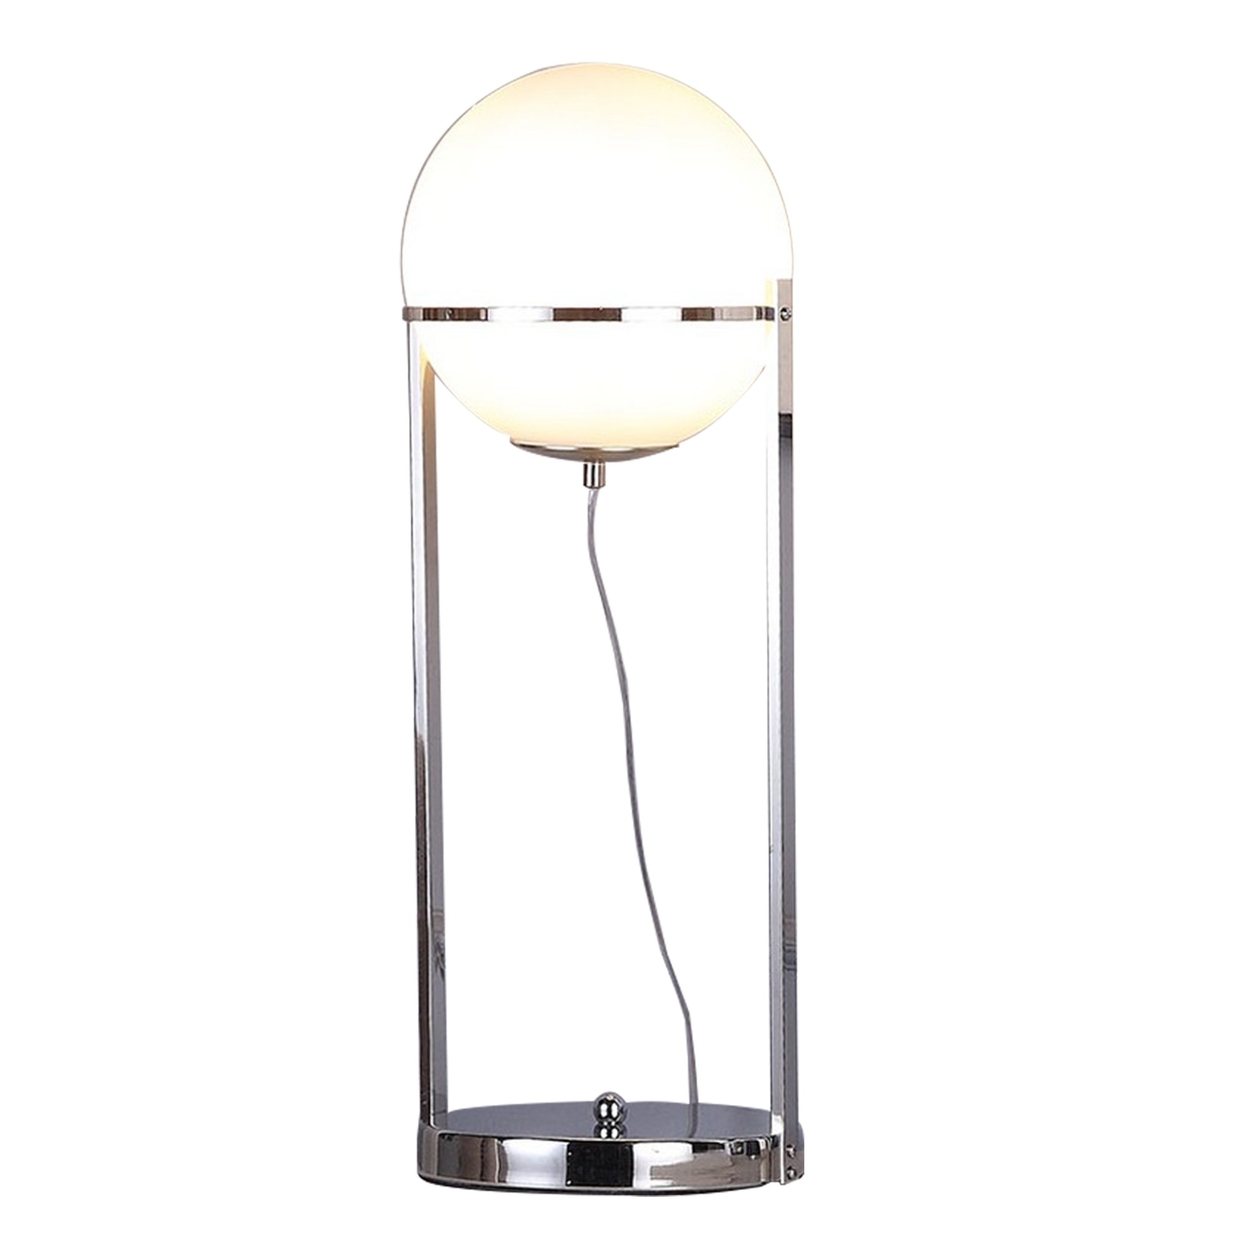 Jim 22 Inch Table Lamp, LED Light, Metal Body, Modern Globe Shade, Silver -Saltoro Sherpi